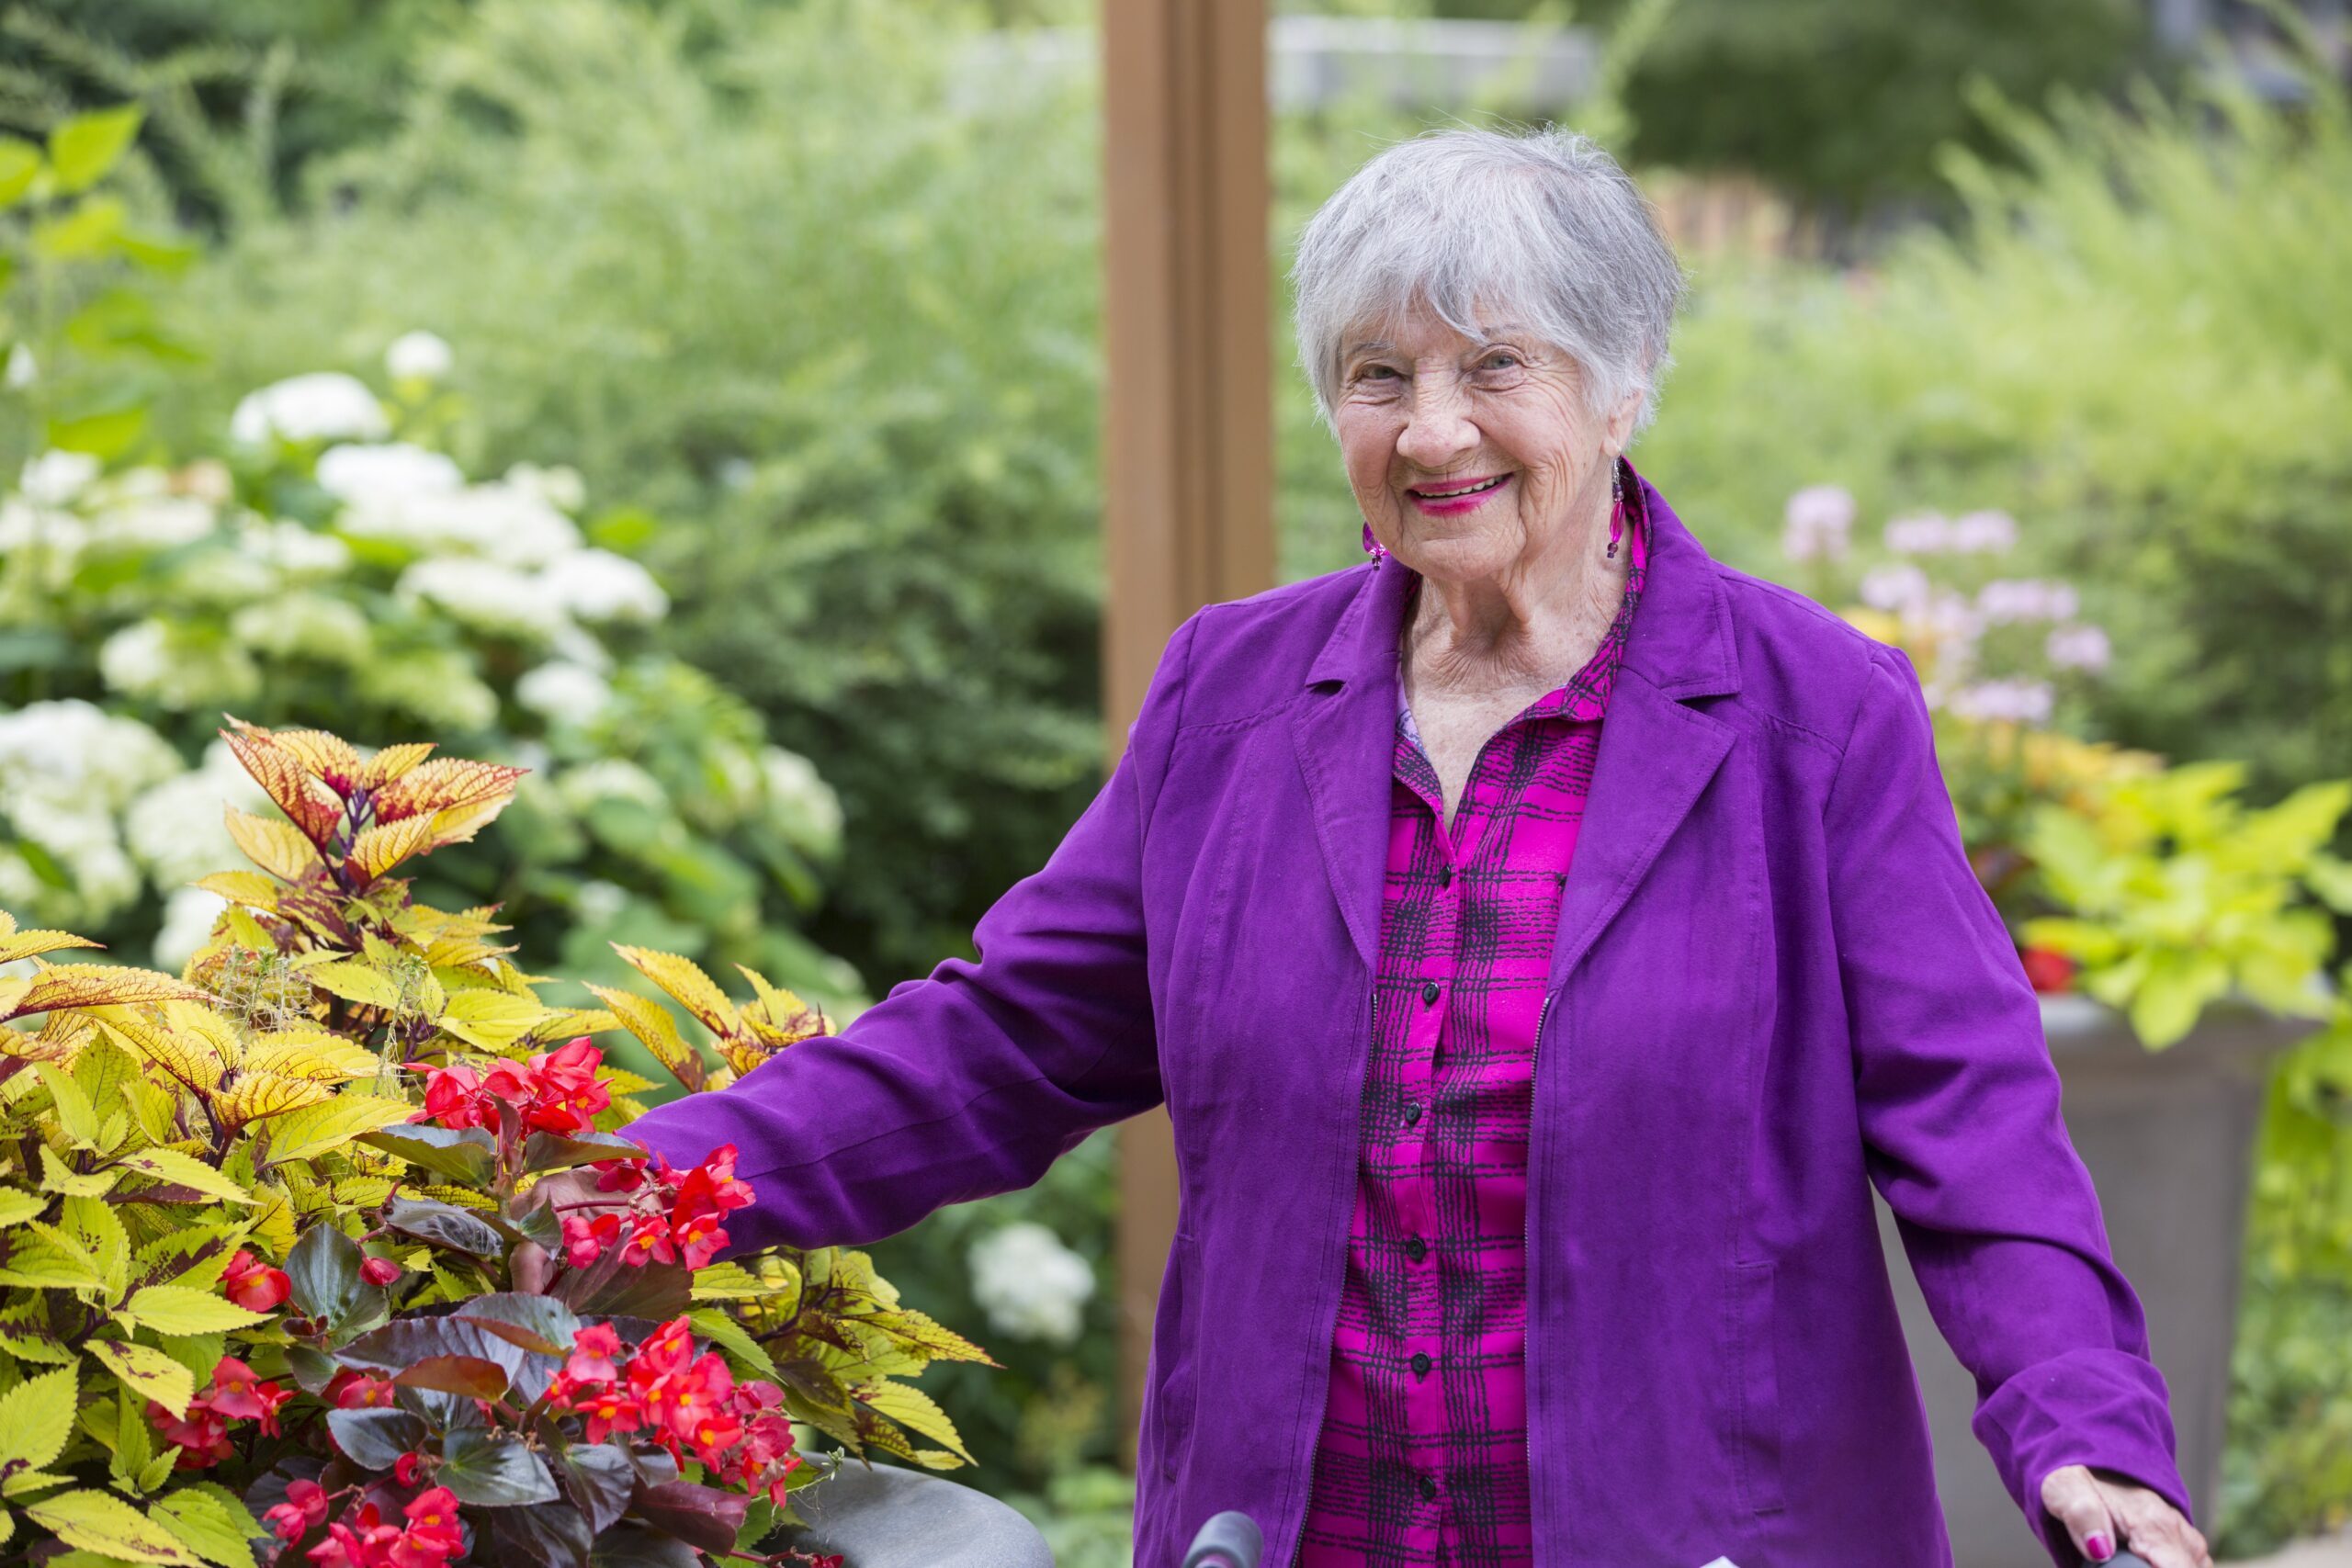 Woman walks through flower garden looking happy